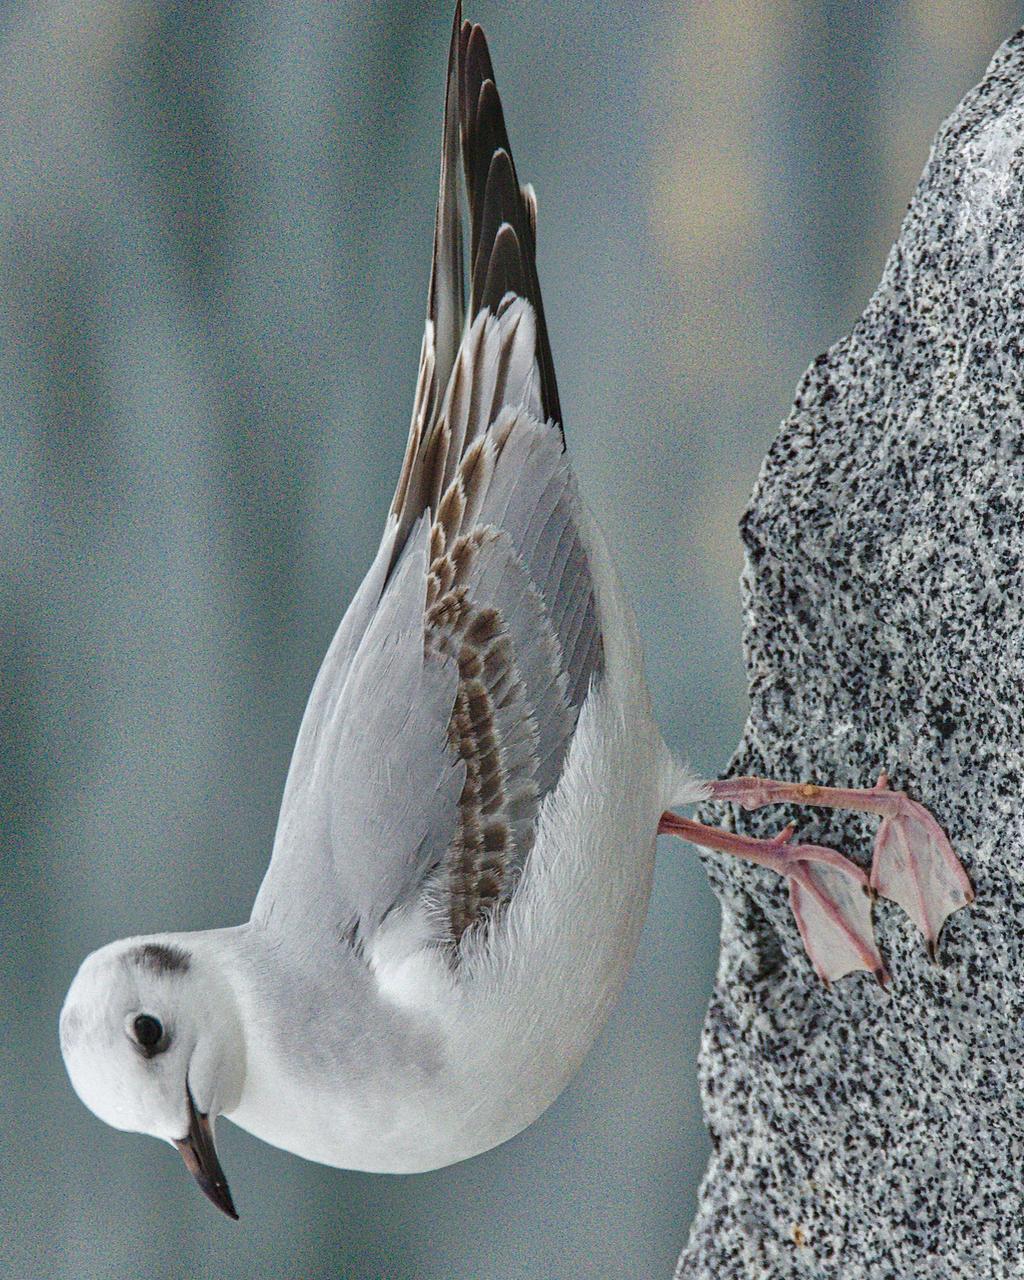 Bonaparte's Gull Photo by Brian Avent